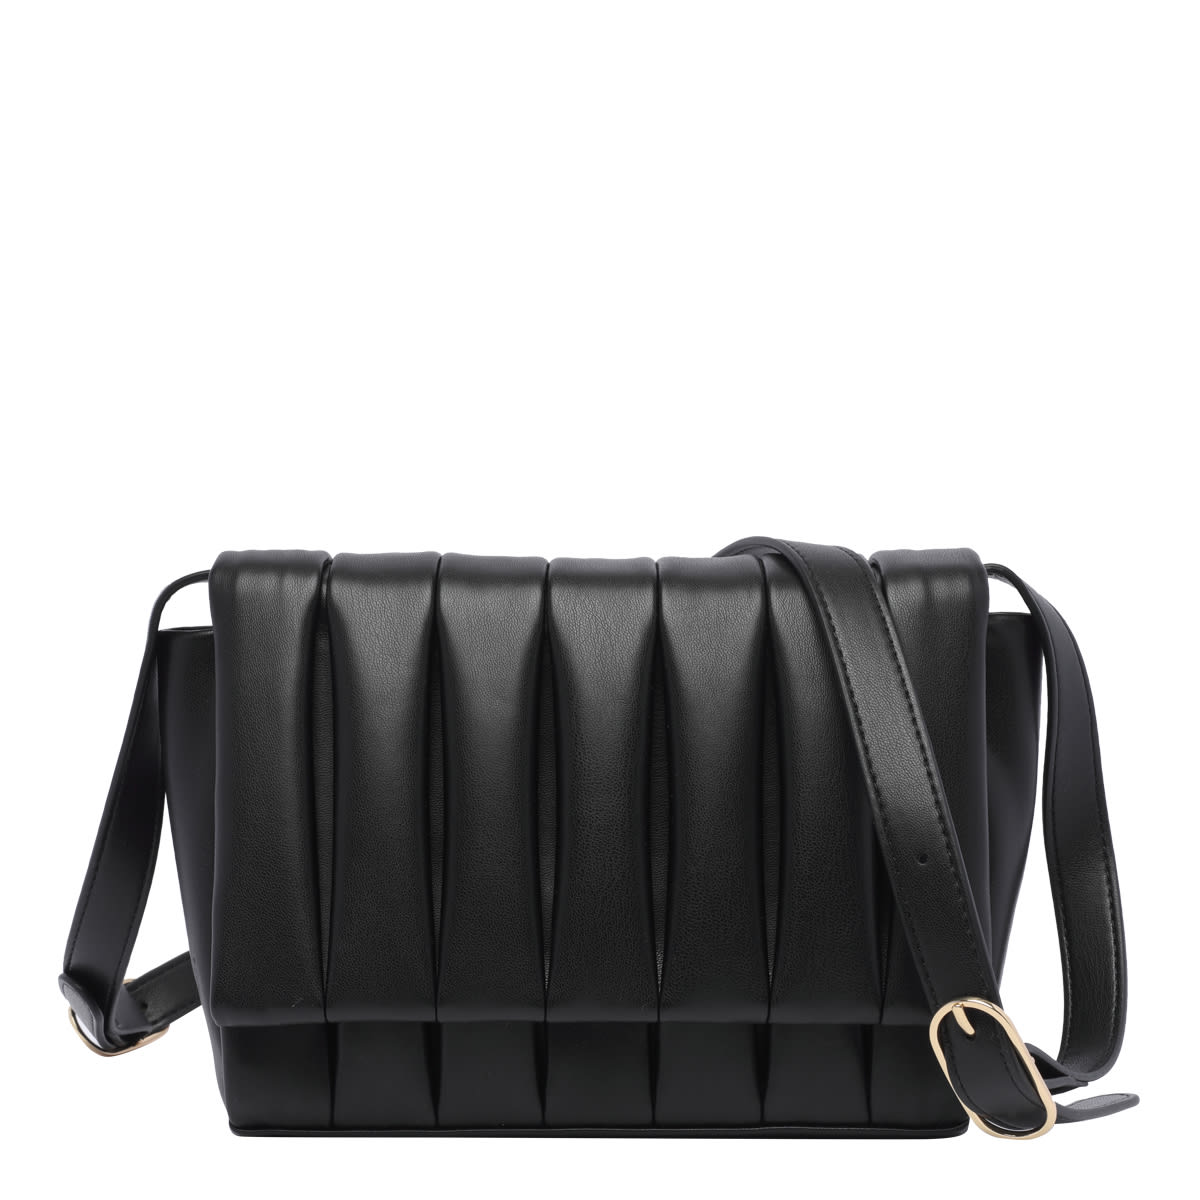 Mytheresa - Luxury Fashion & Designer Shopping  Marc jacobs snapshot bag,  Mens crossbody bag, Marc jacobs